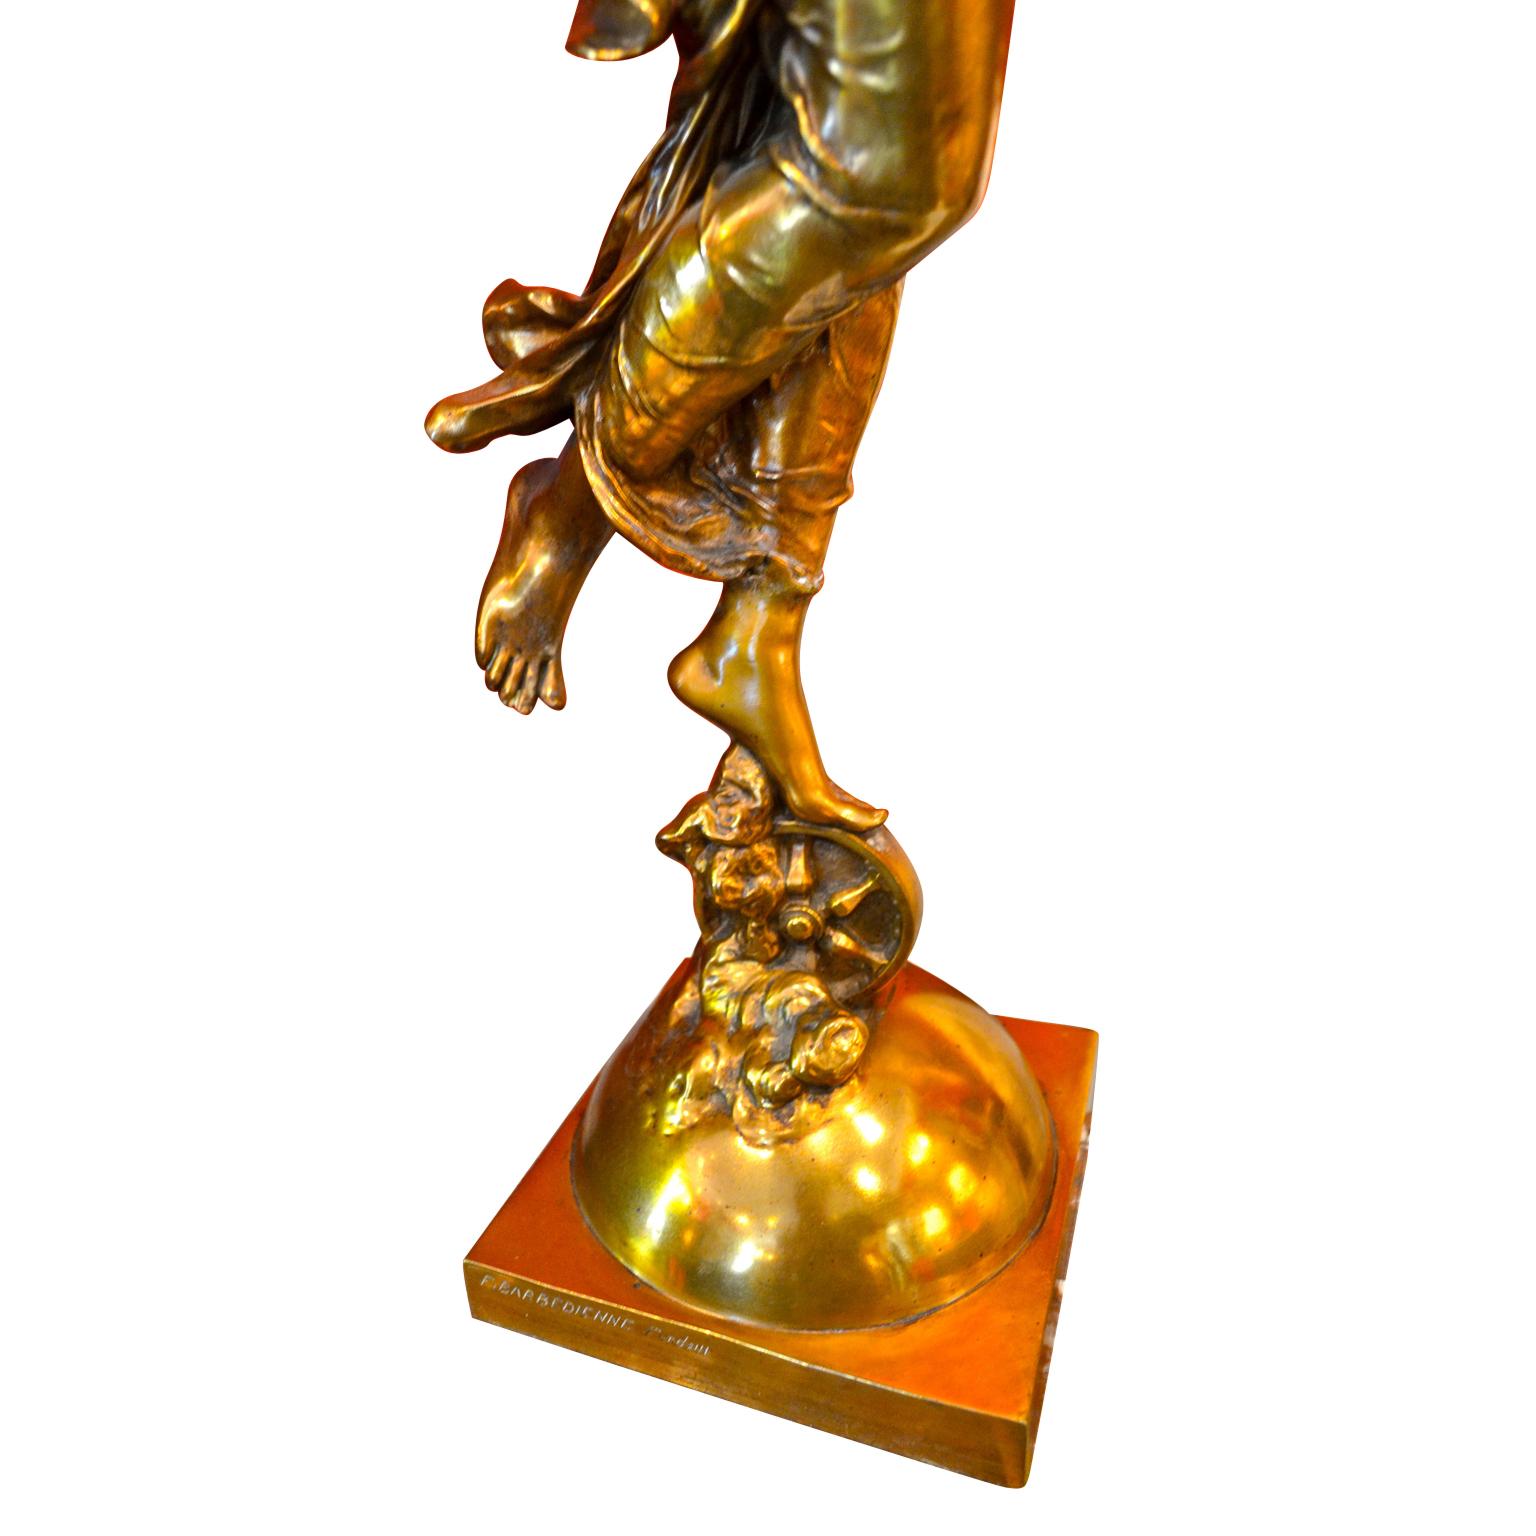 19th Century Gilt Bronze Statue Titled “La Fortune” by Augustin Moreau-Vauthier